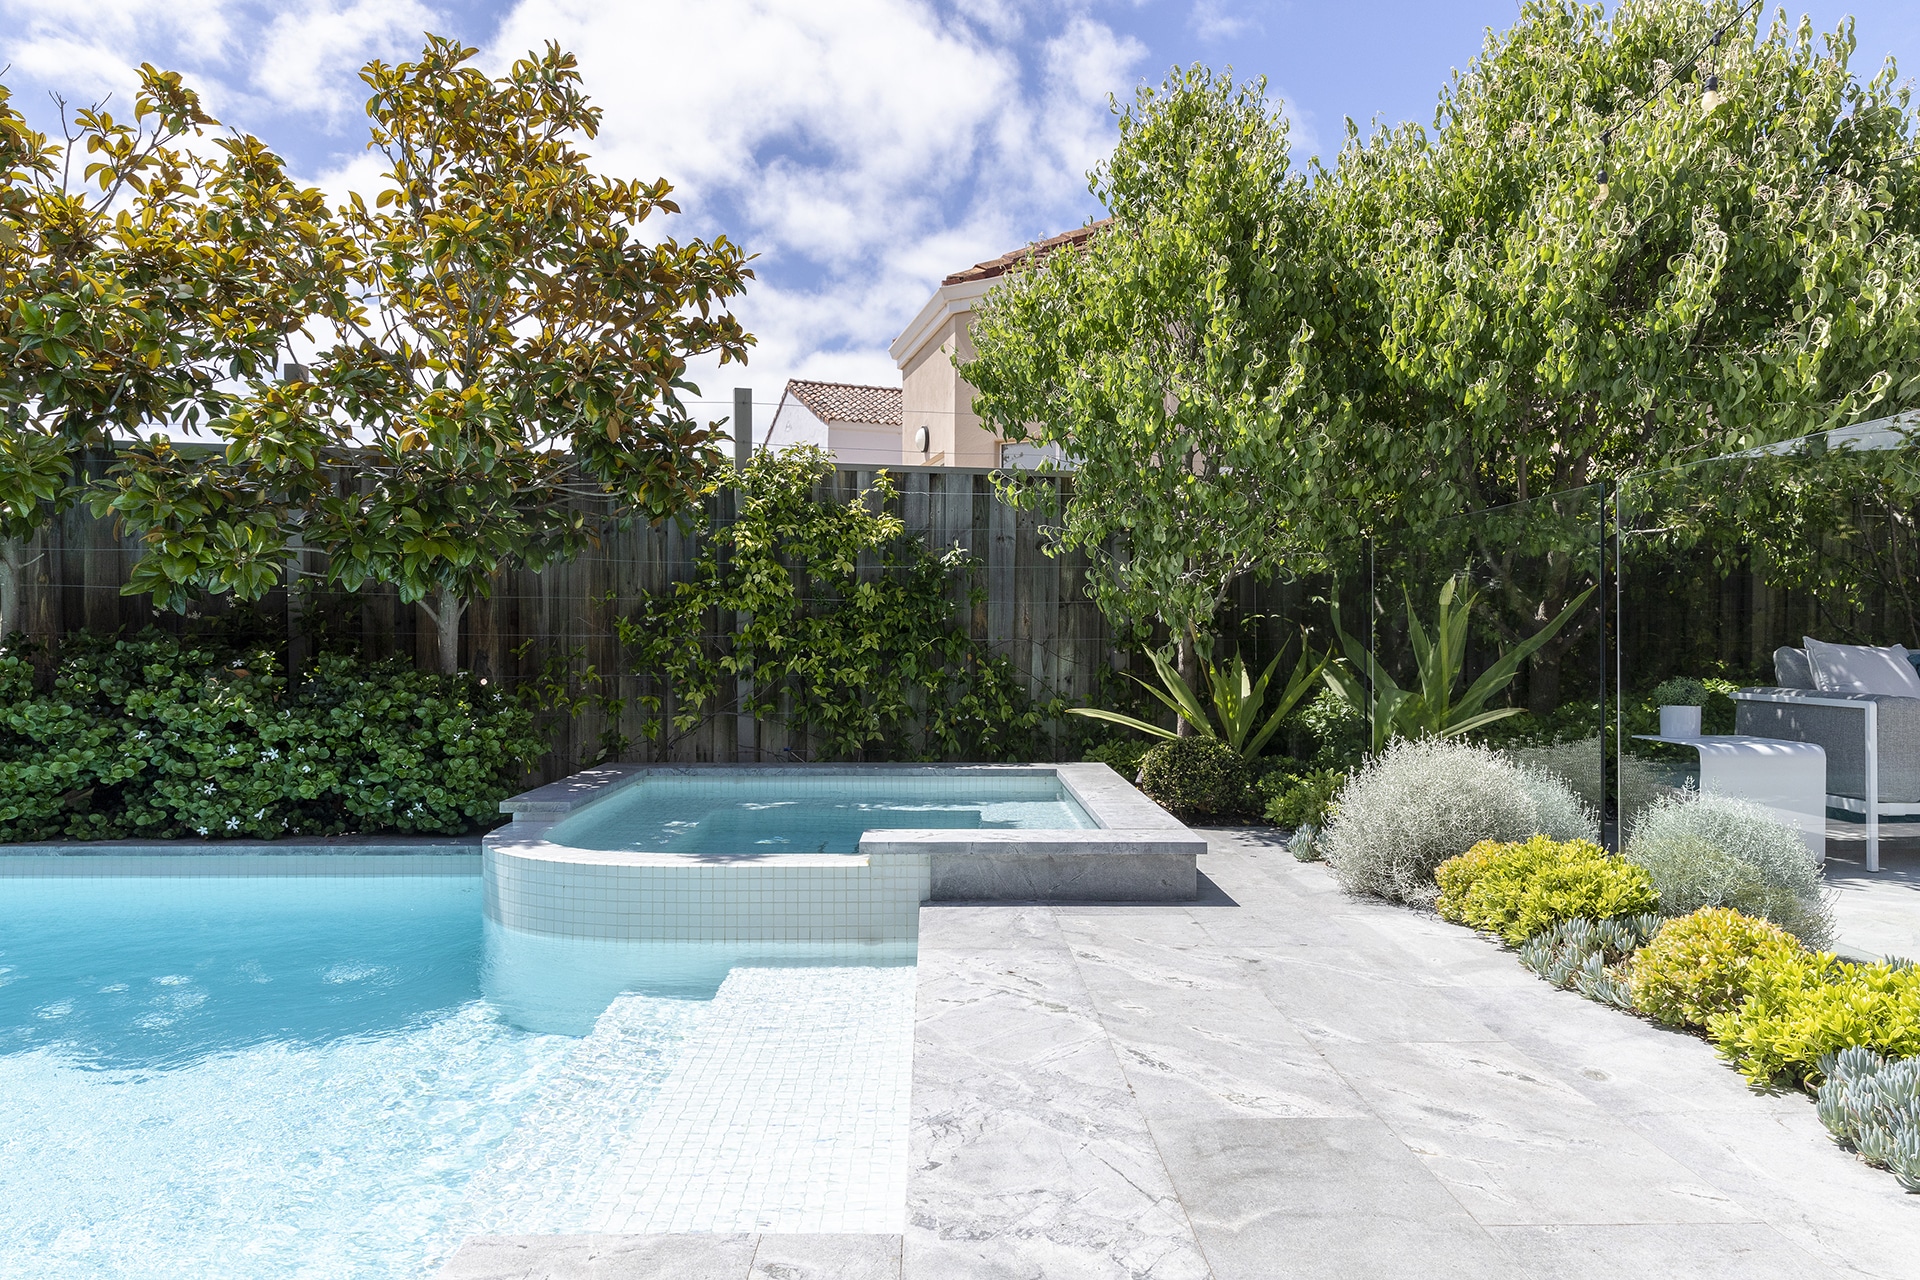 A concrete pool and spa.